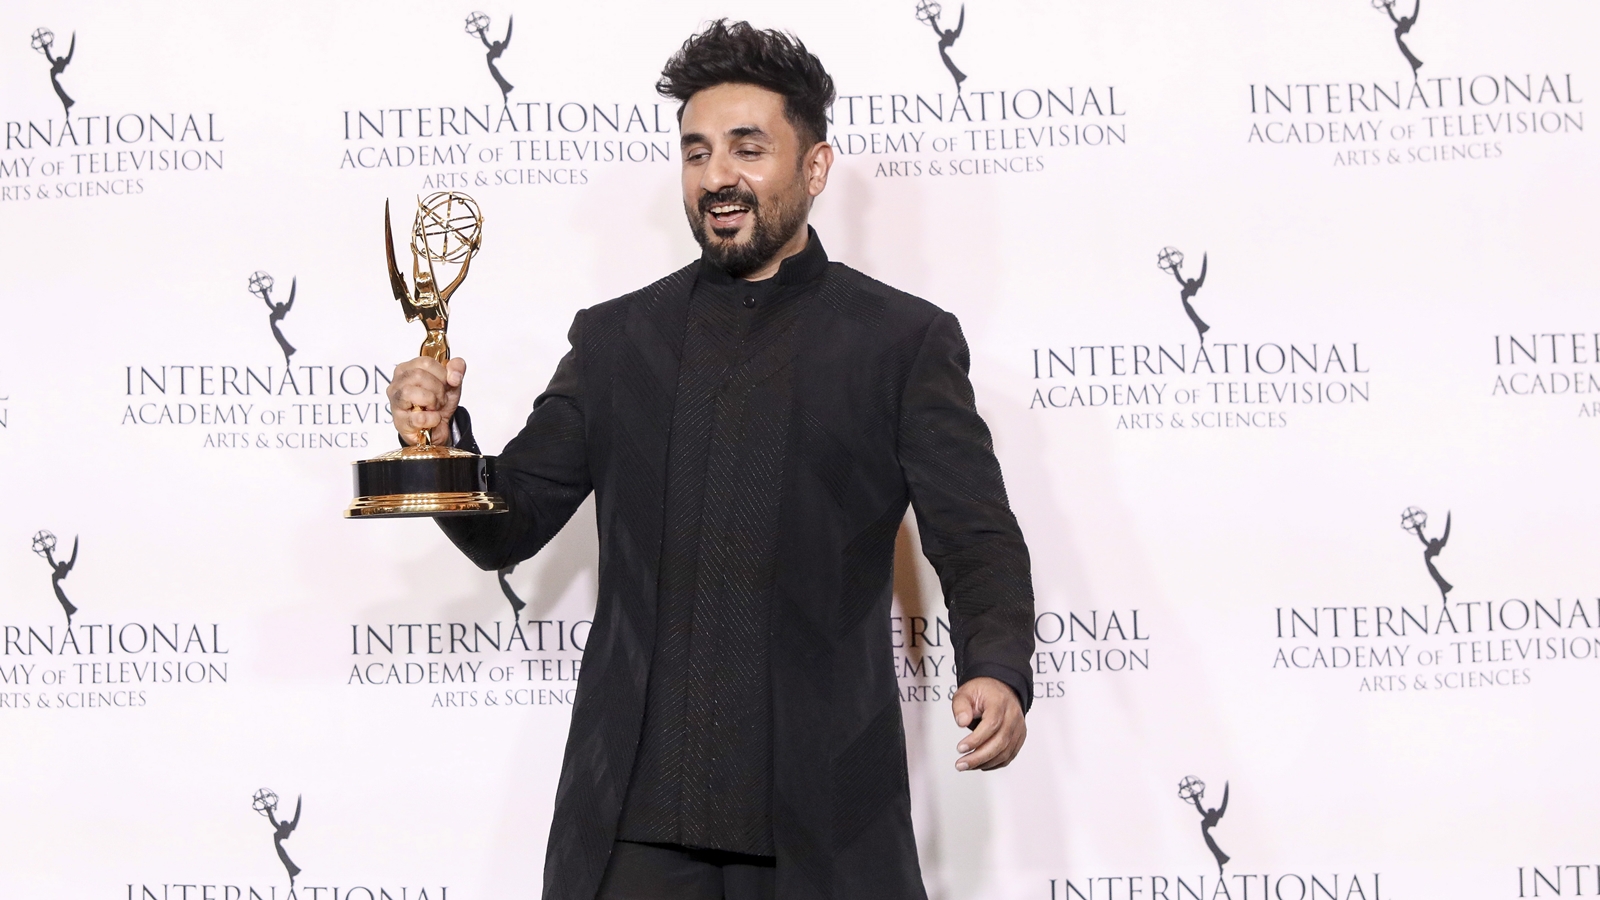 Vir Das wins International Emmy for comedy | Mumbai News - The Indian Express